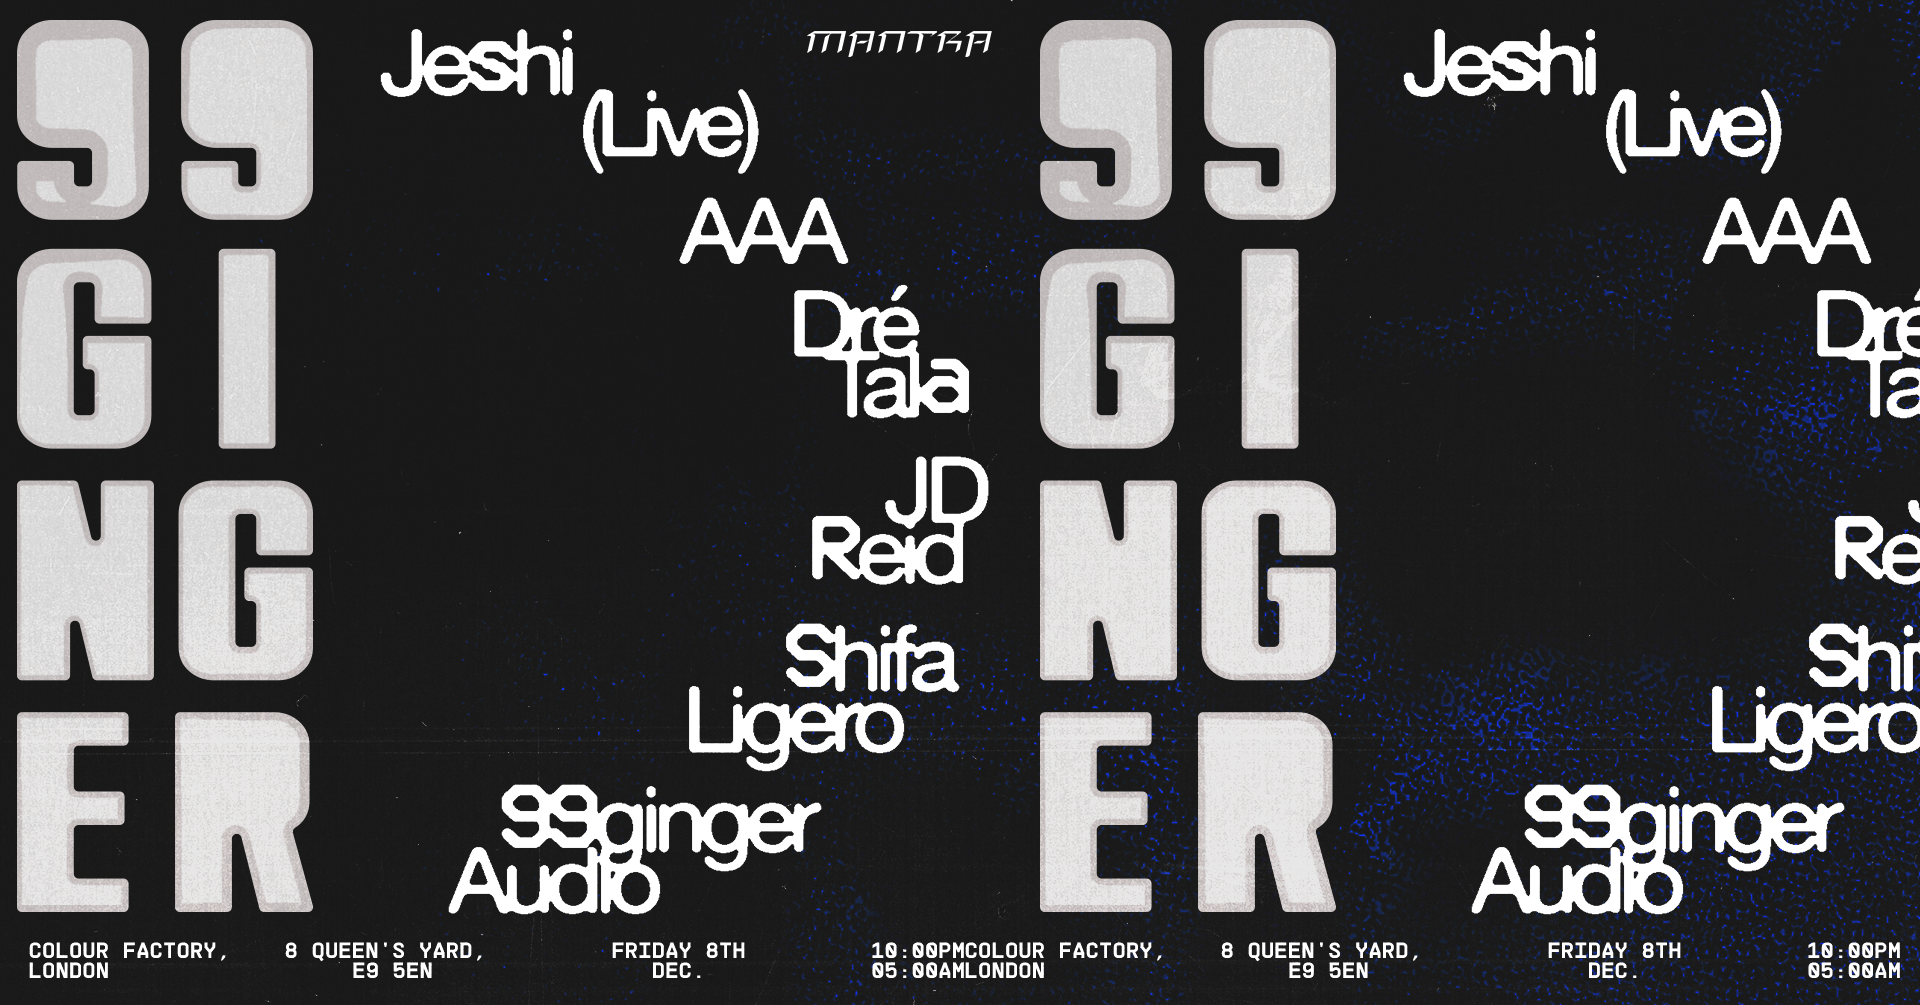 99GINGER: Jeshi, Dre Tala, JD Reid, Shifa Ligero, AAA  - フライヤー表